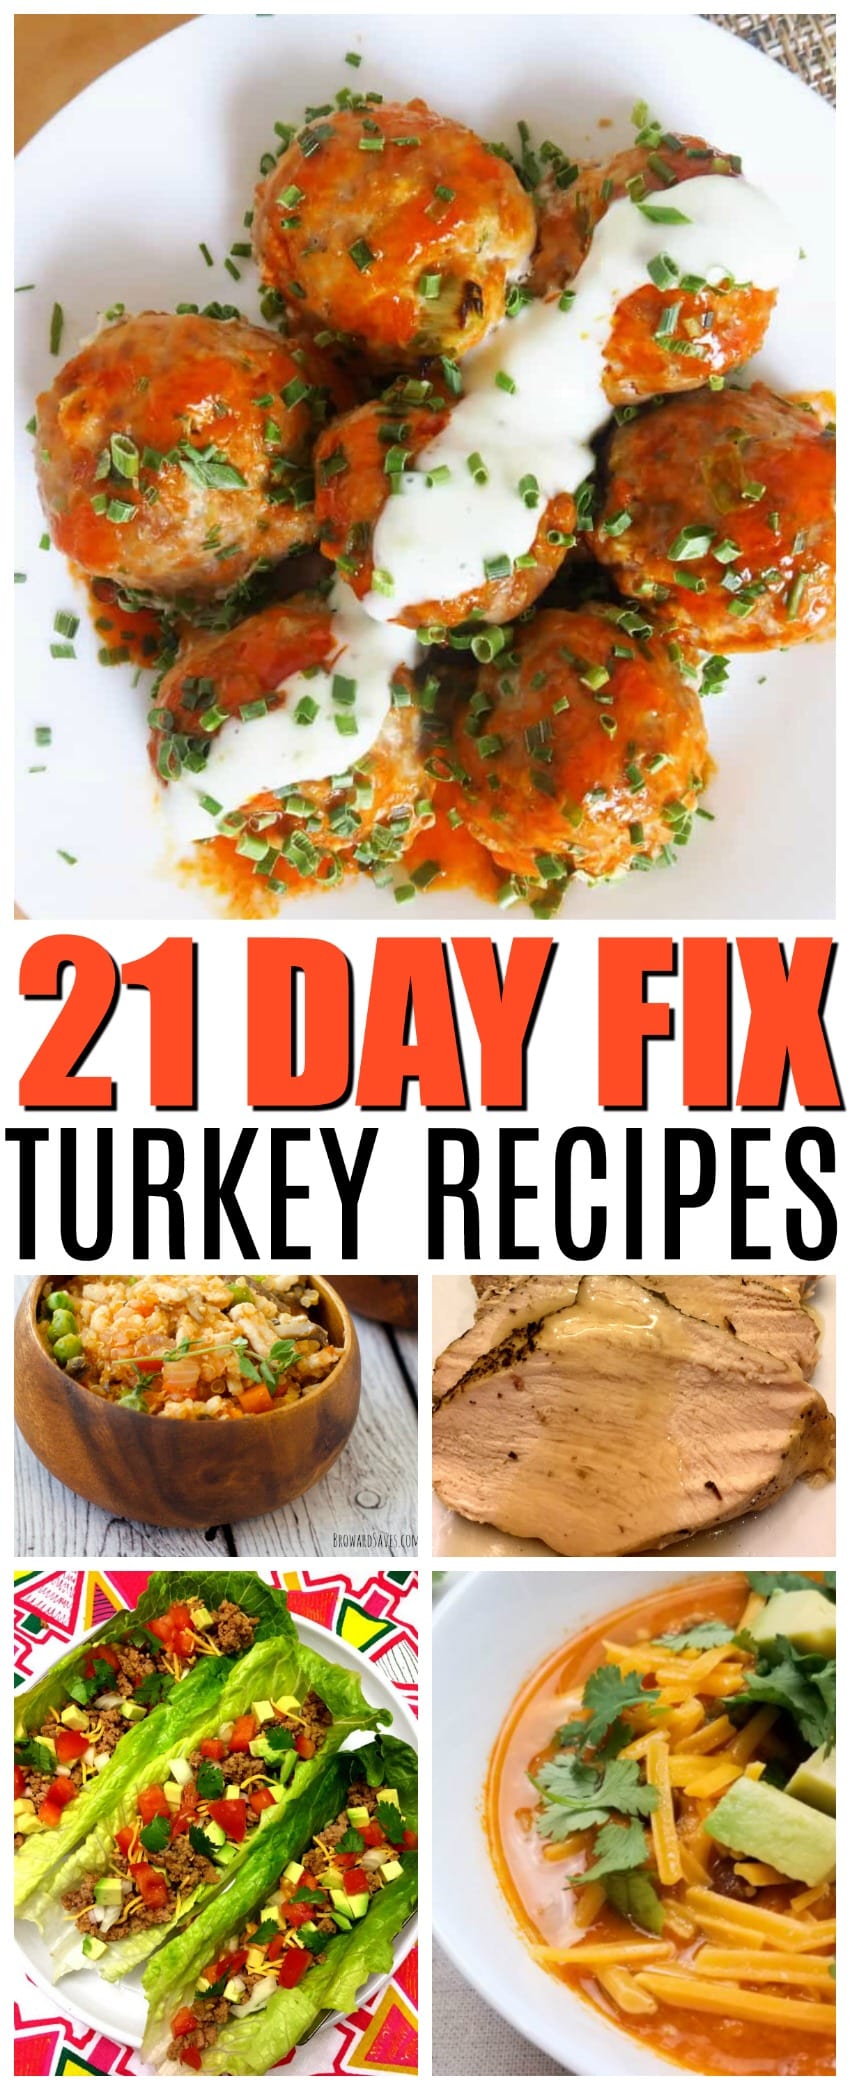 21 day fix turkey recipes